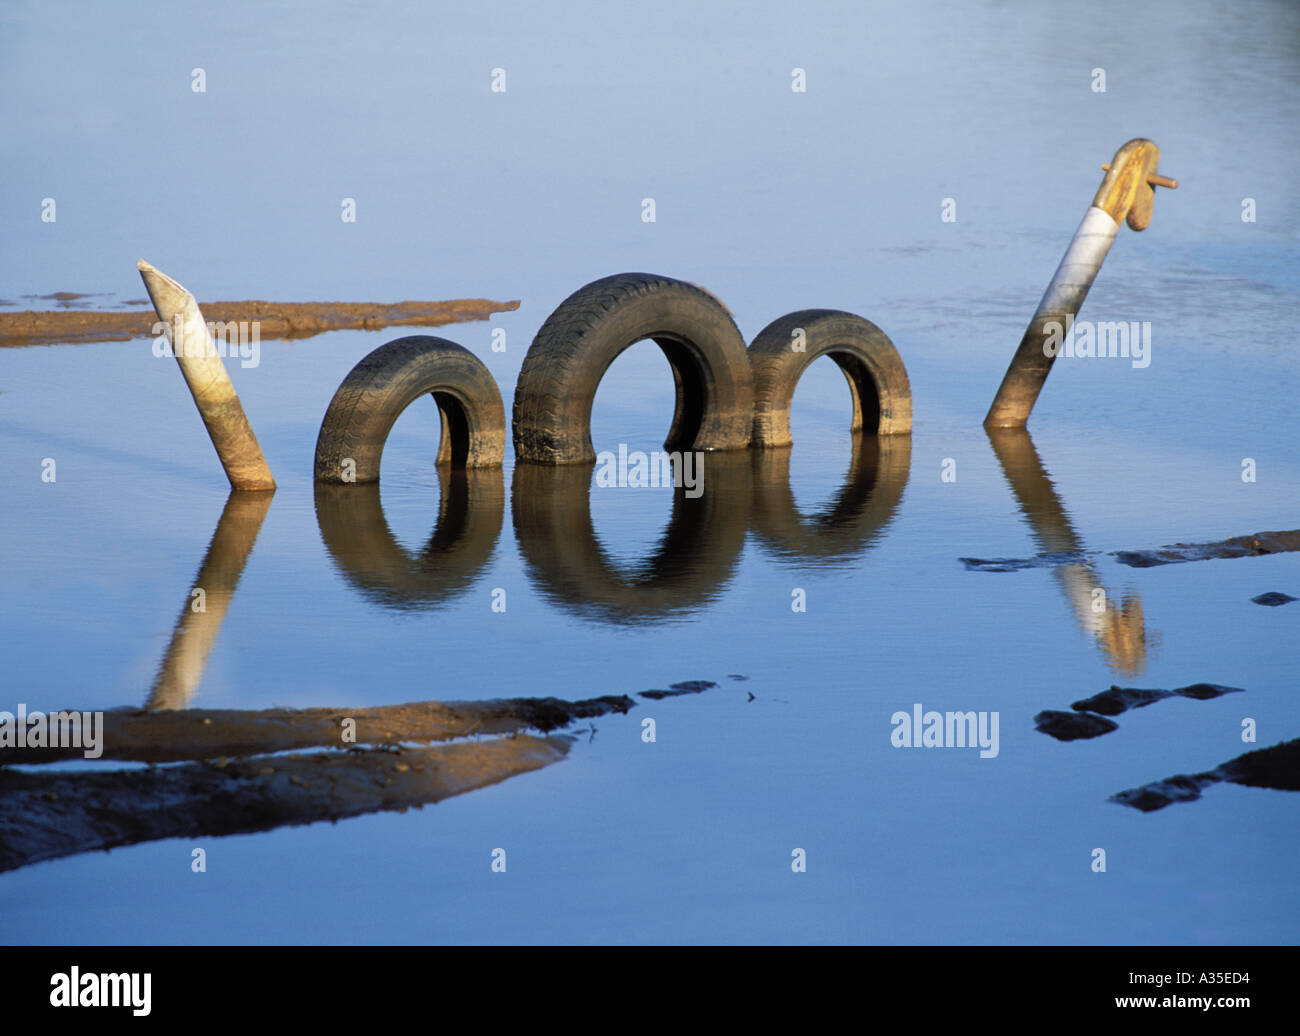 Monstruo Del Lago Ness. Broma hecha de neumáticos viejos y una cabeza de caballo mecedora. Foto de stock